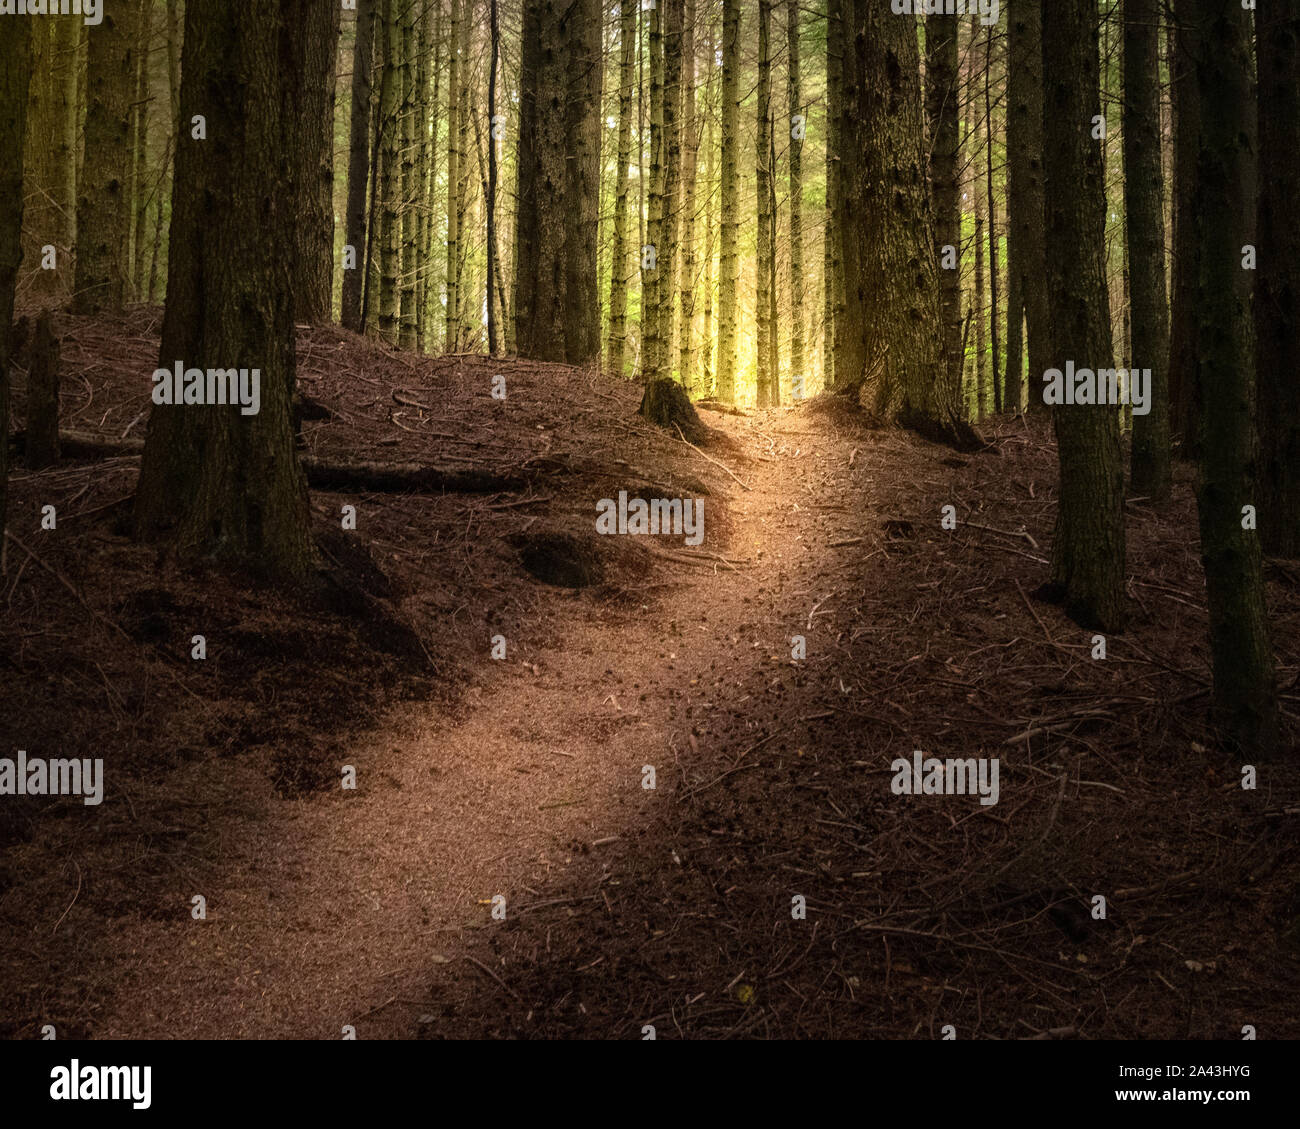 Pathway through the forest, Glencoe Lochan Stock Photo